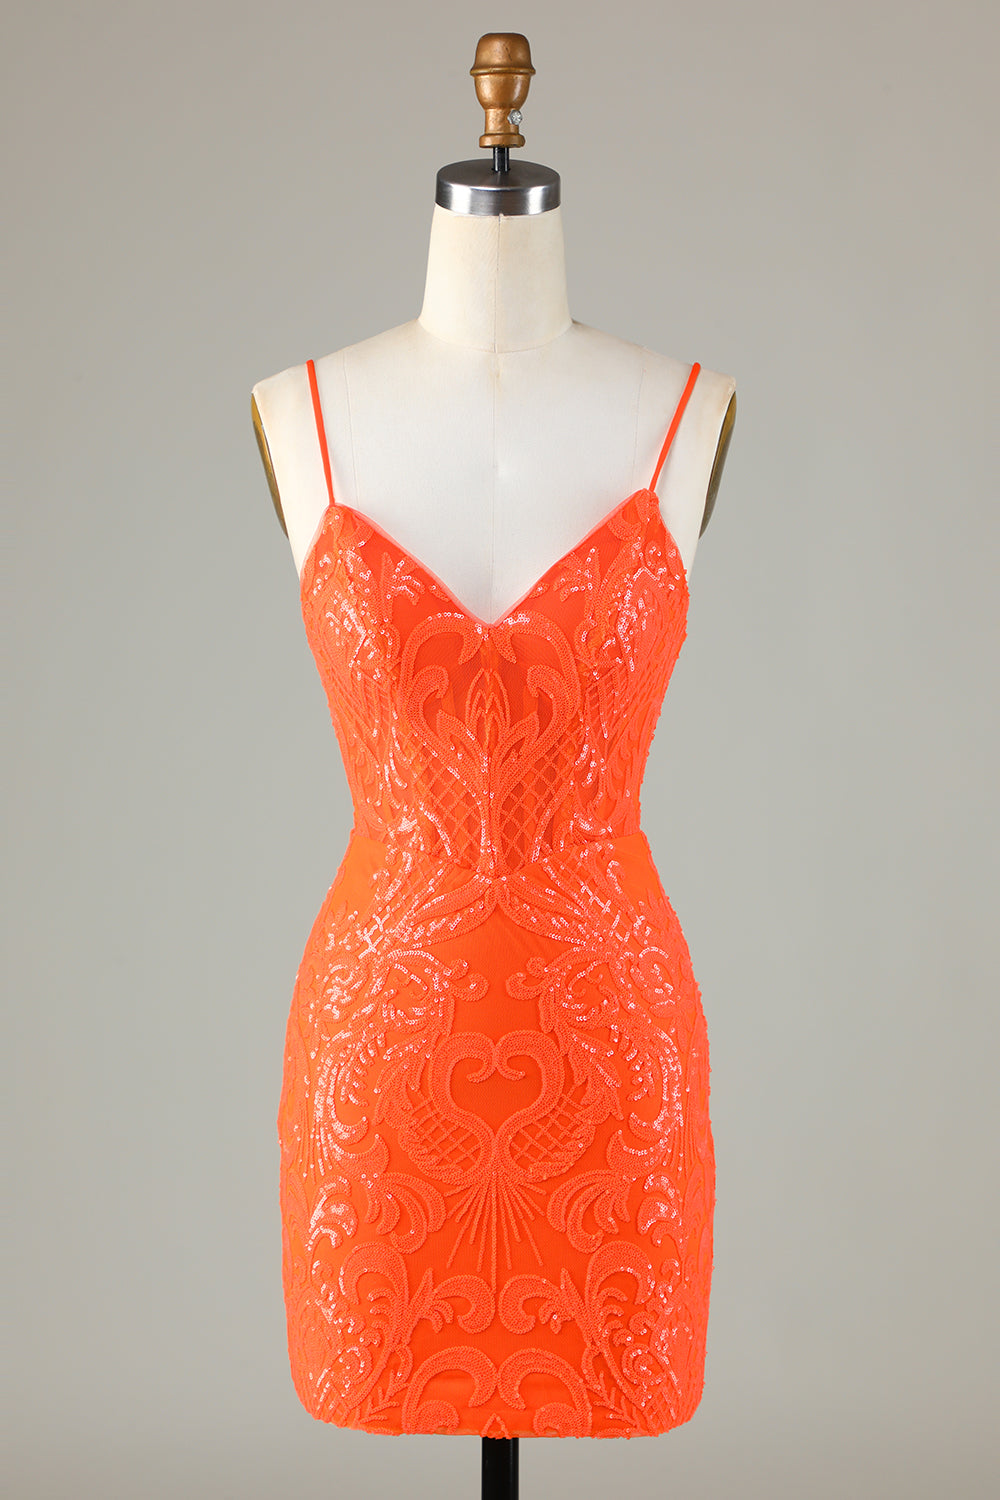 Sprankelende pailletten strakke oranje homecoming jurk